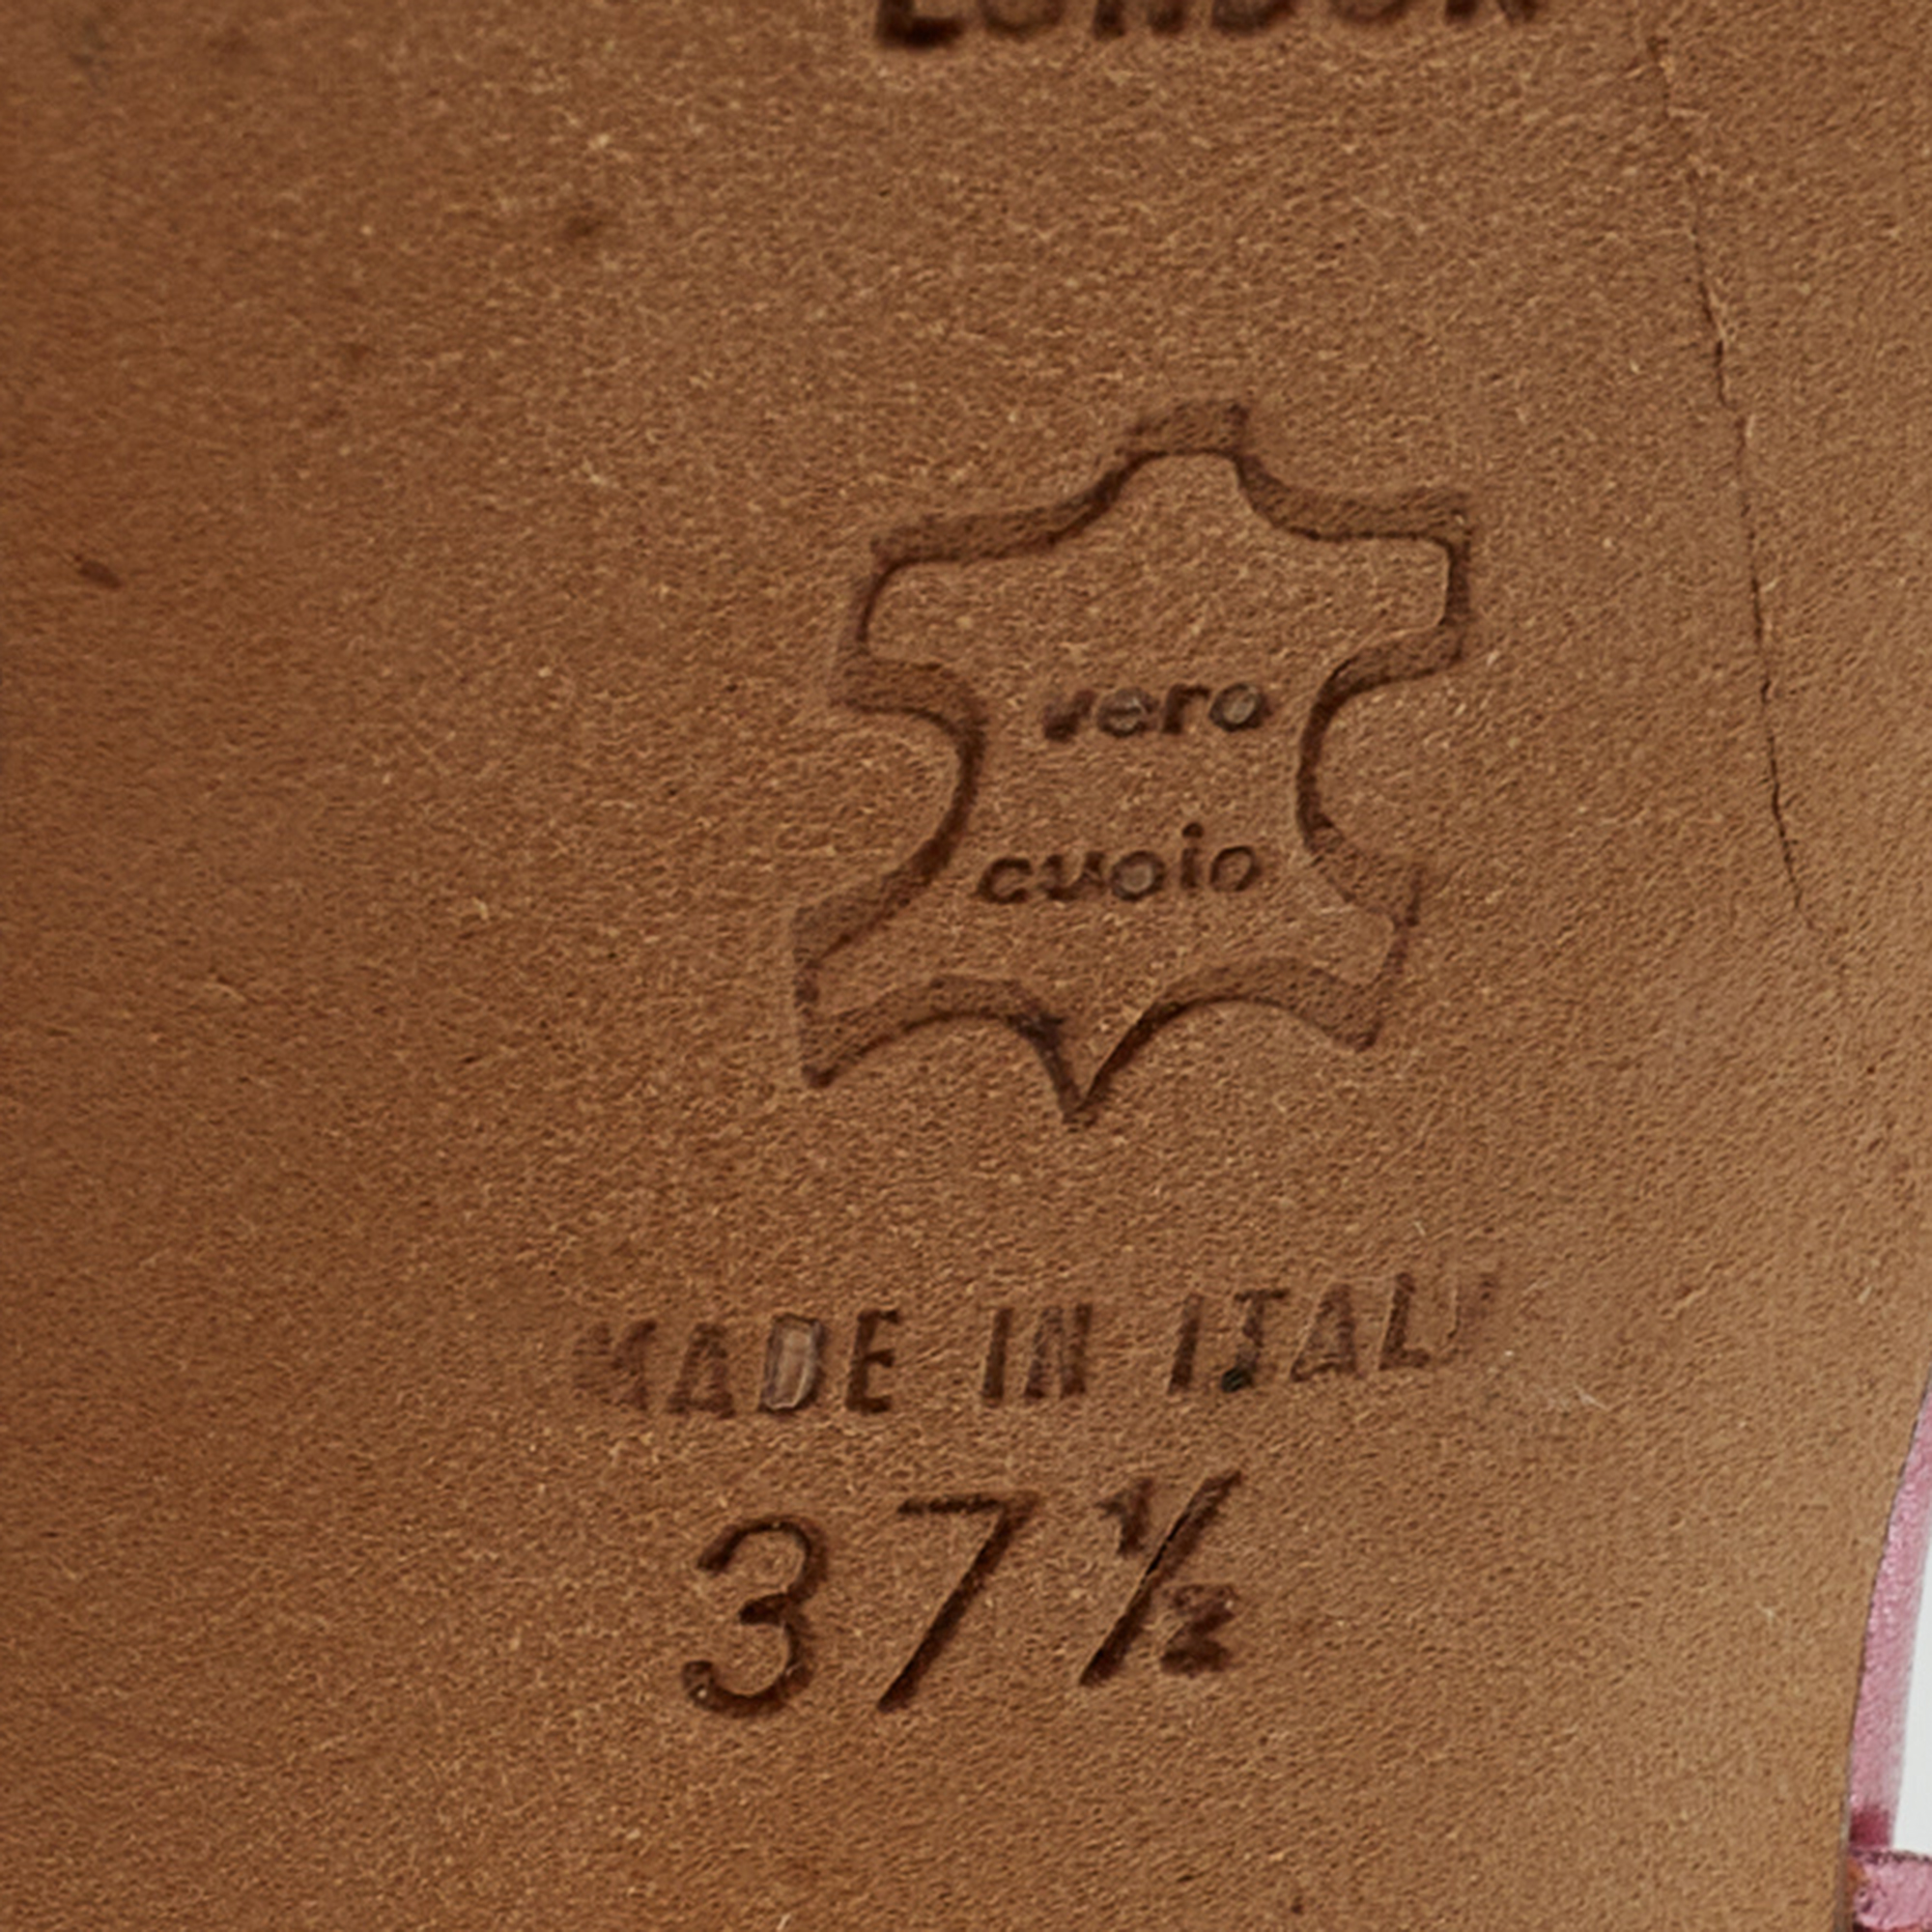 Jimmy Choo Metallic Pink Leather Slingback Sandals Size 37.5